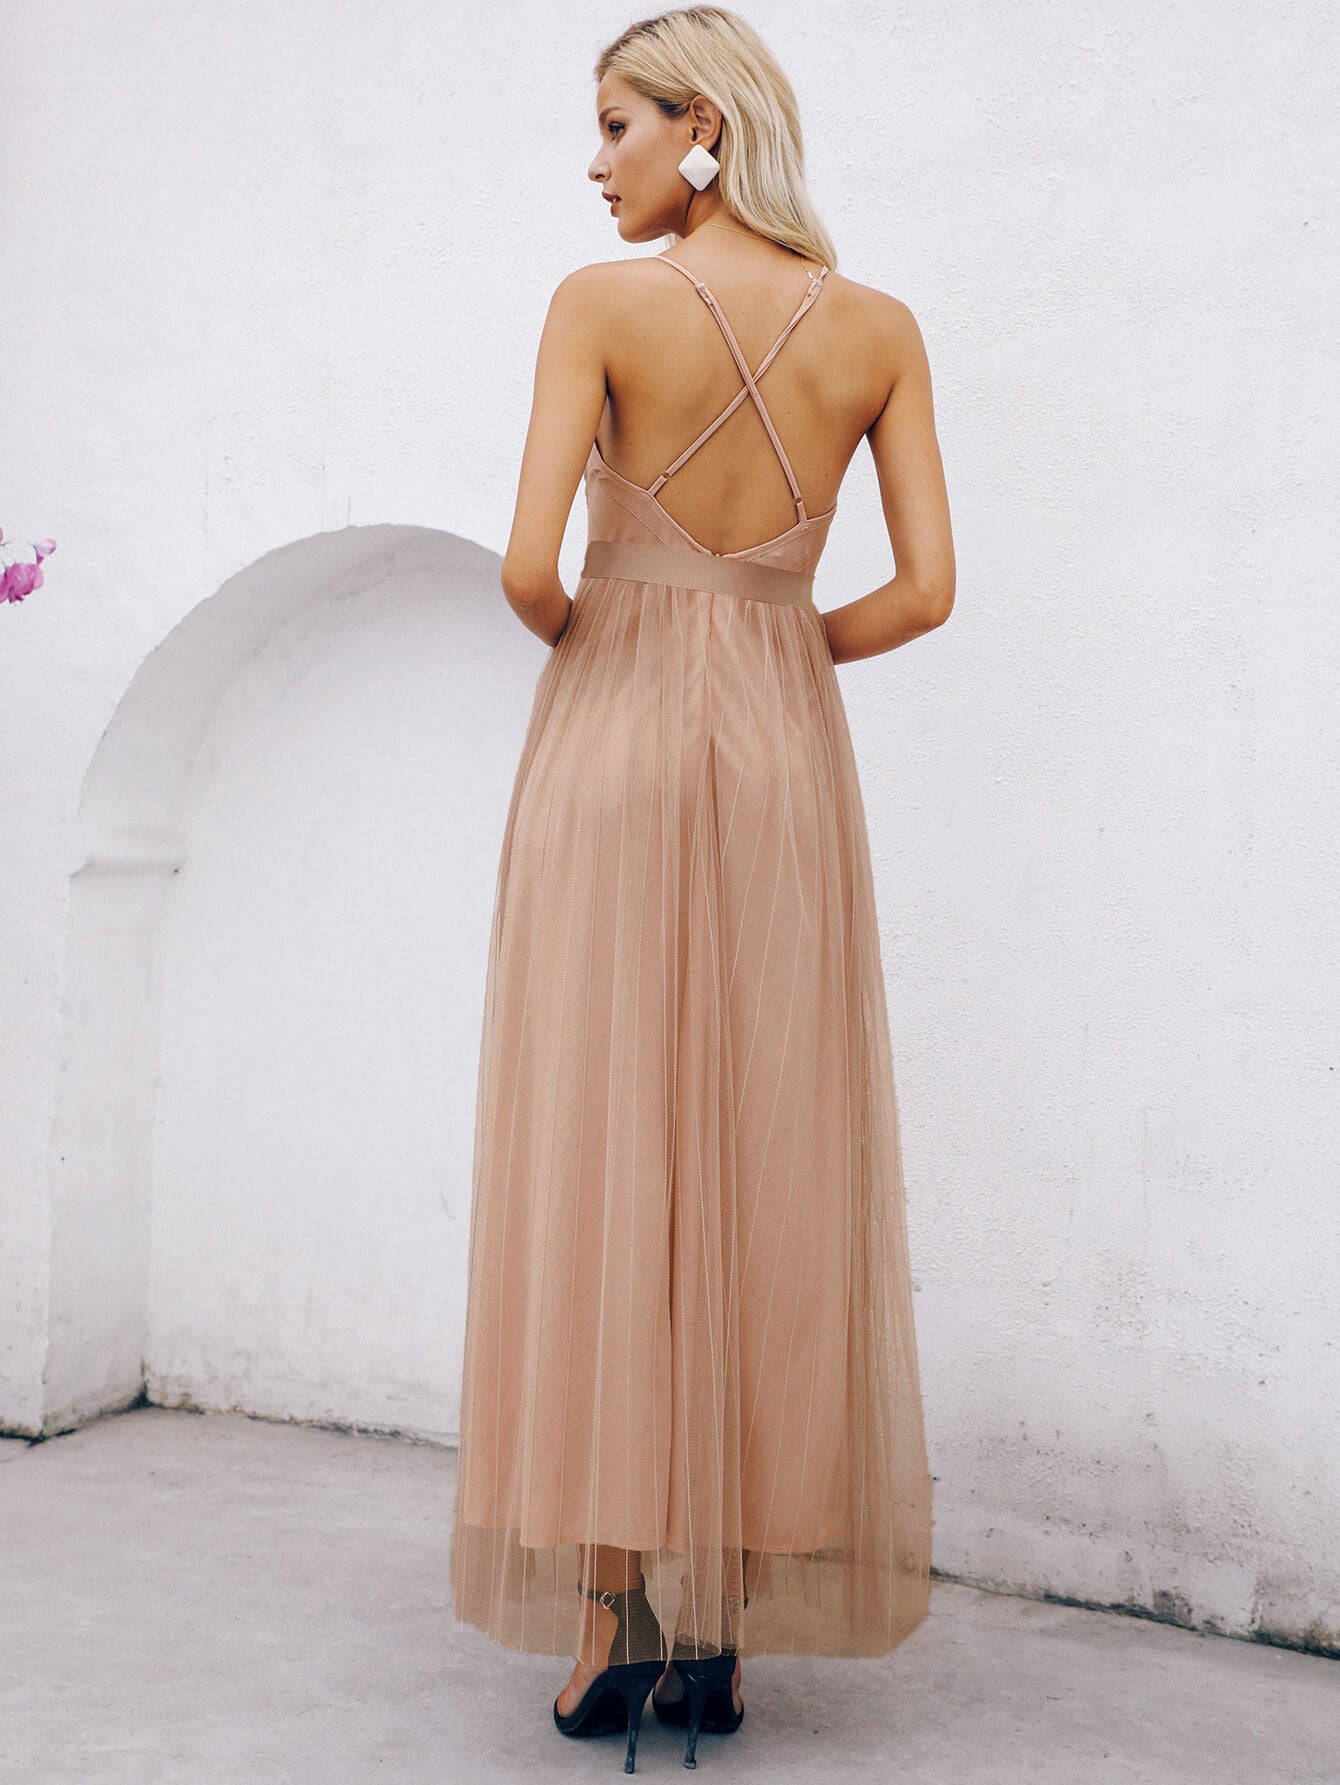 Long Tulle Dress | Plunge Neckline Dress | Classy Fashion Chic